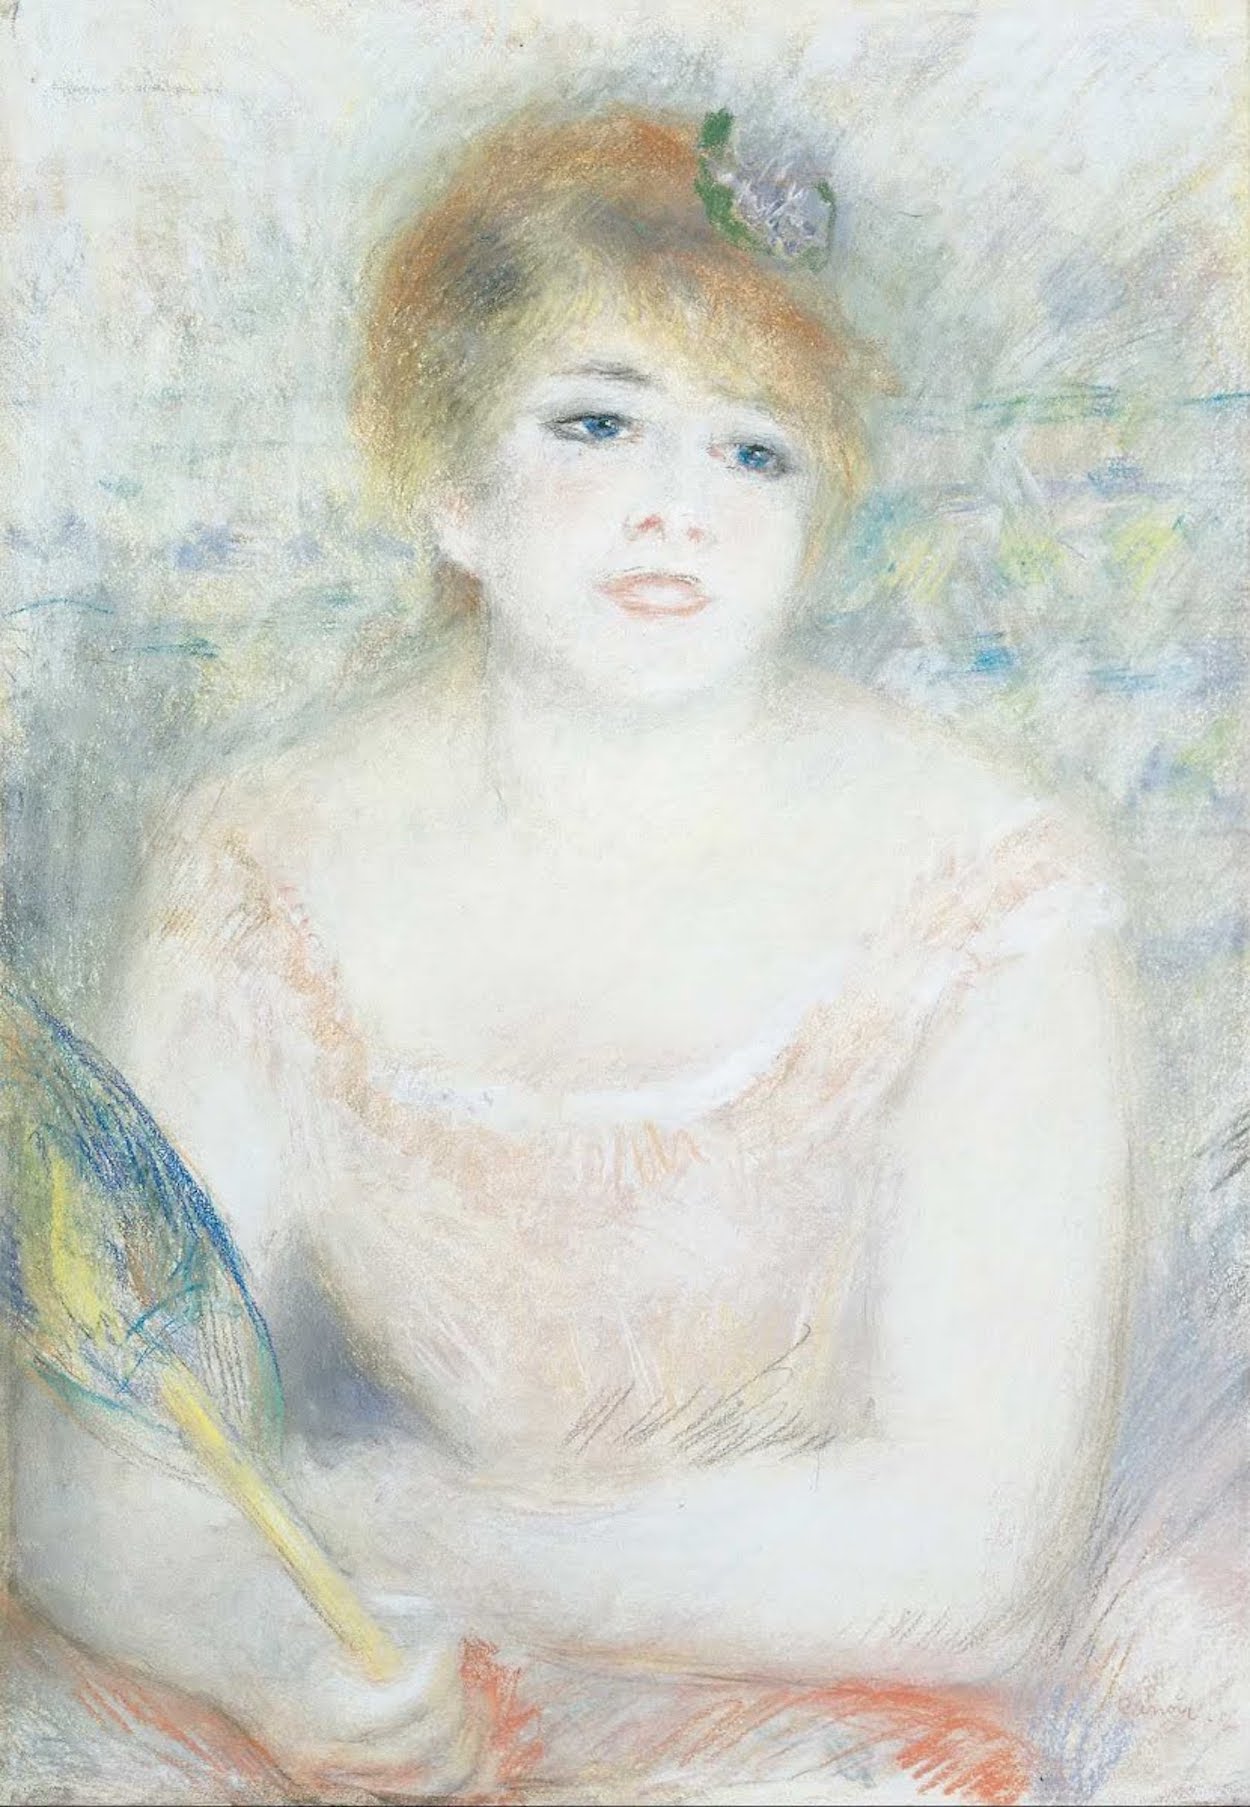 Mlle. Jeanne Samary by Pierre-Auguste Renoir - ok. 1878 - 69.7 x 47.7 cm 